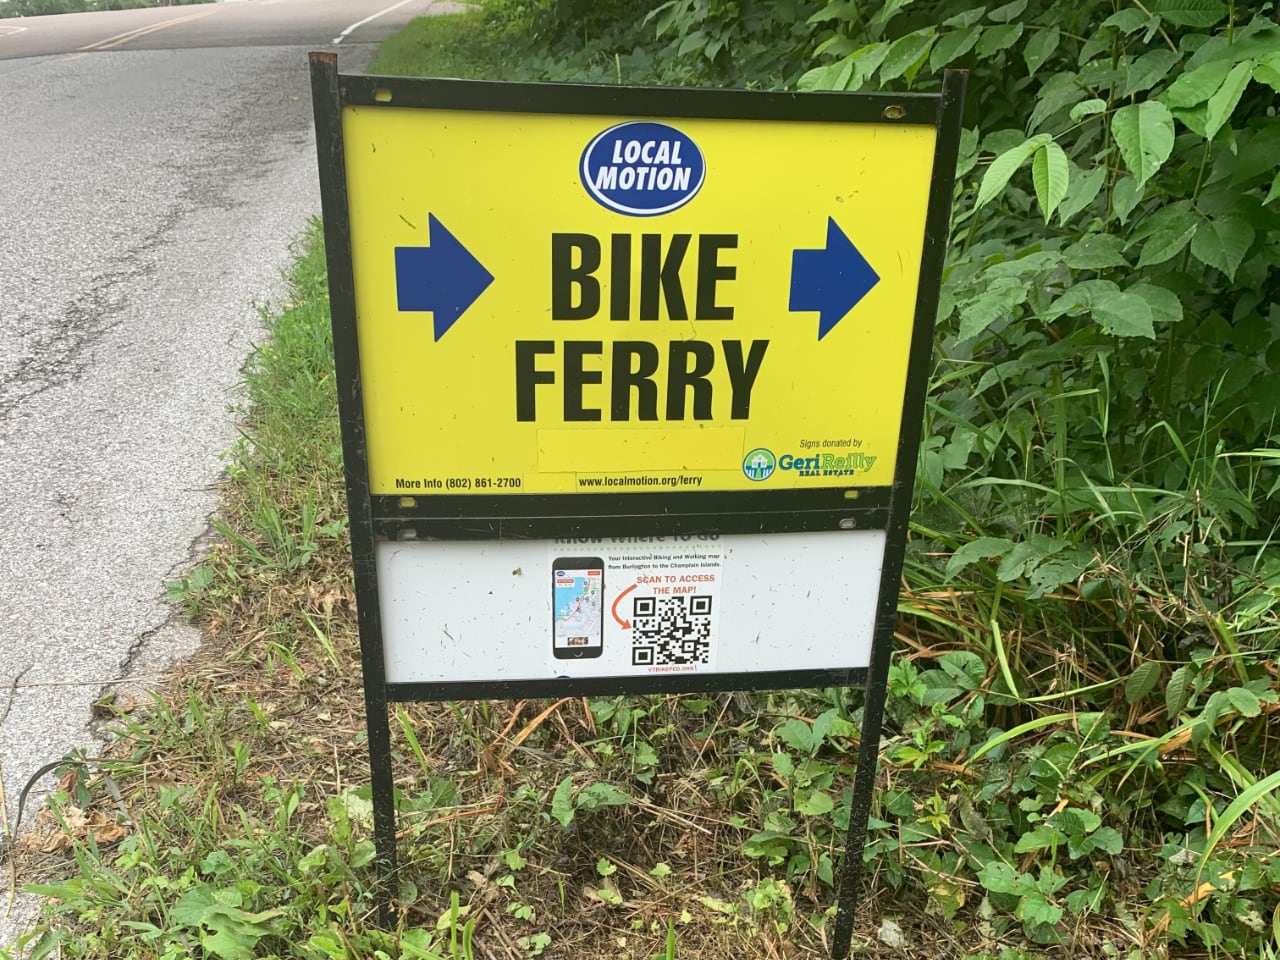 Bike Sign